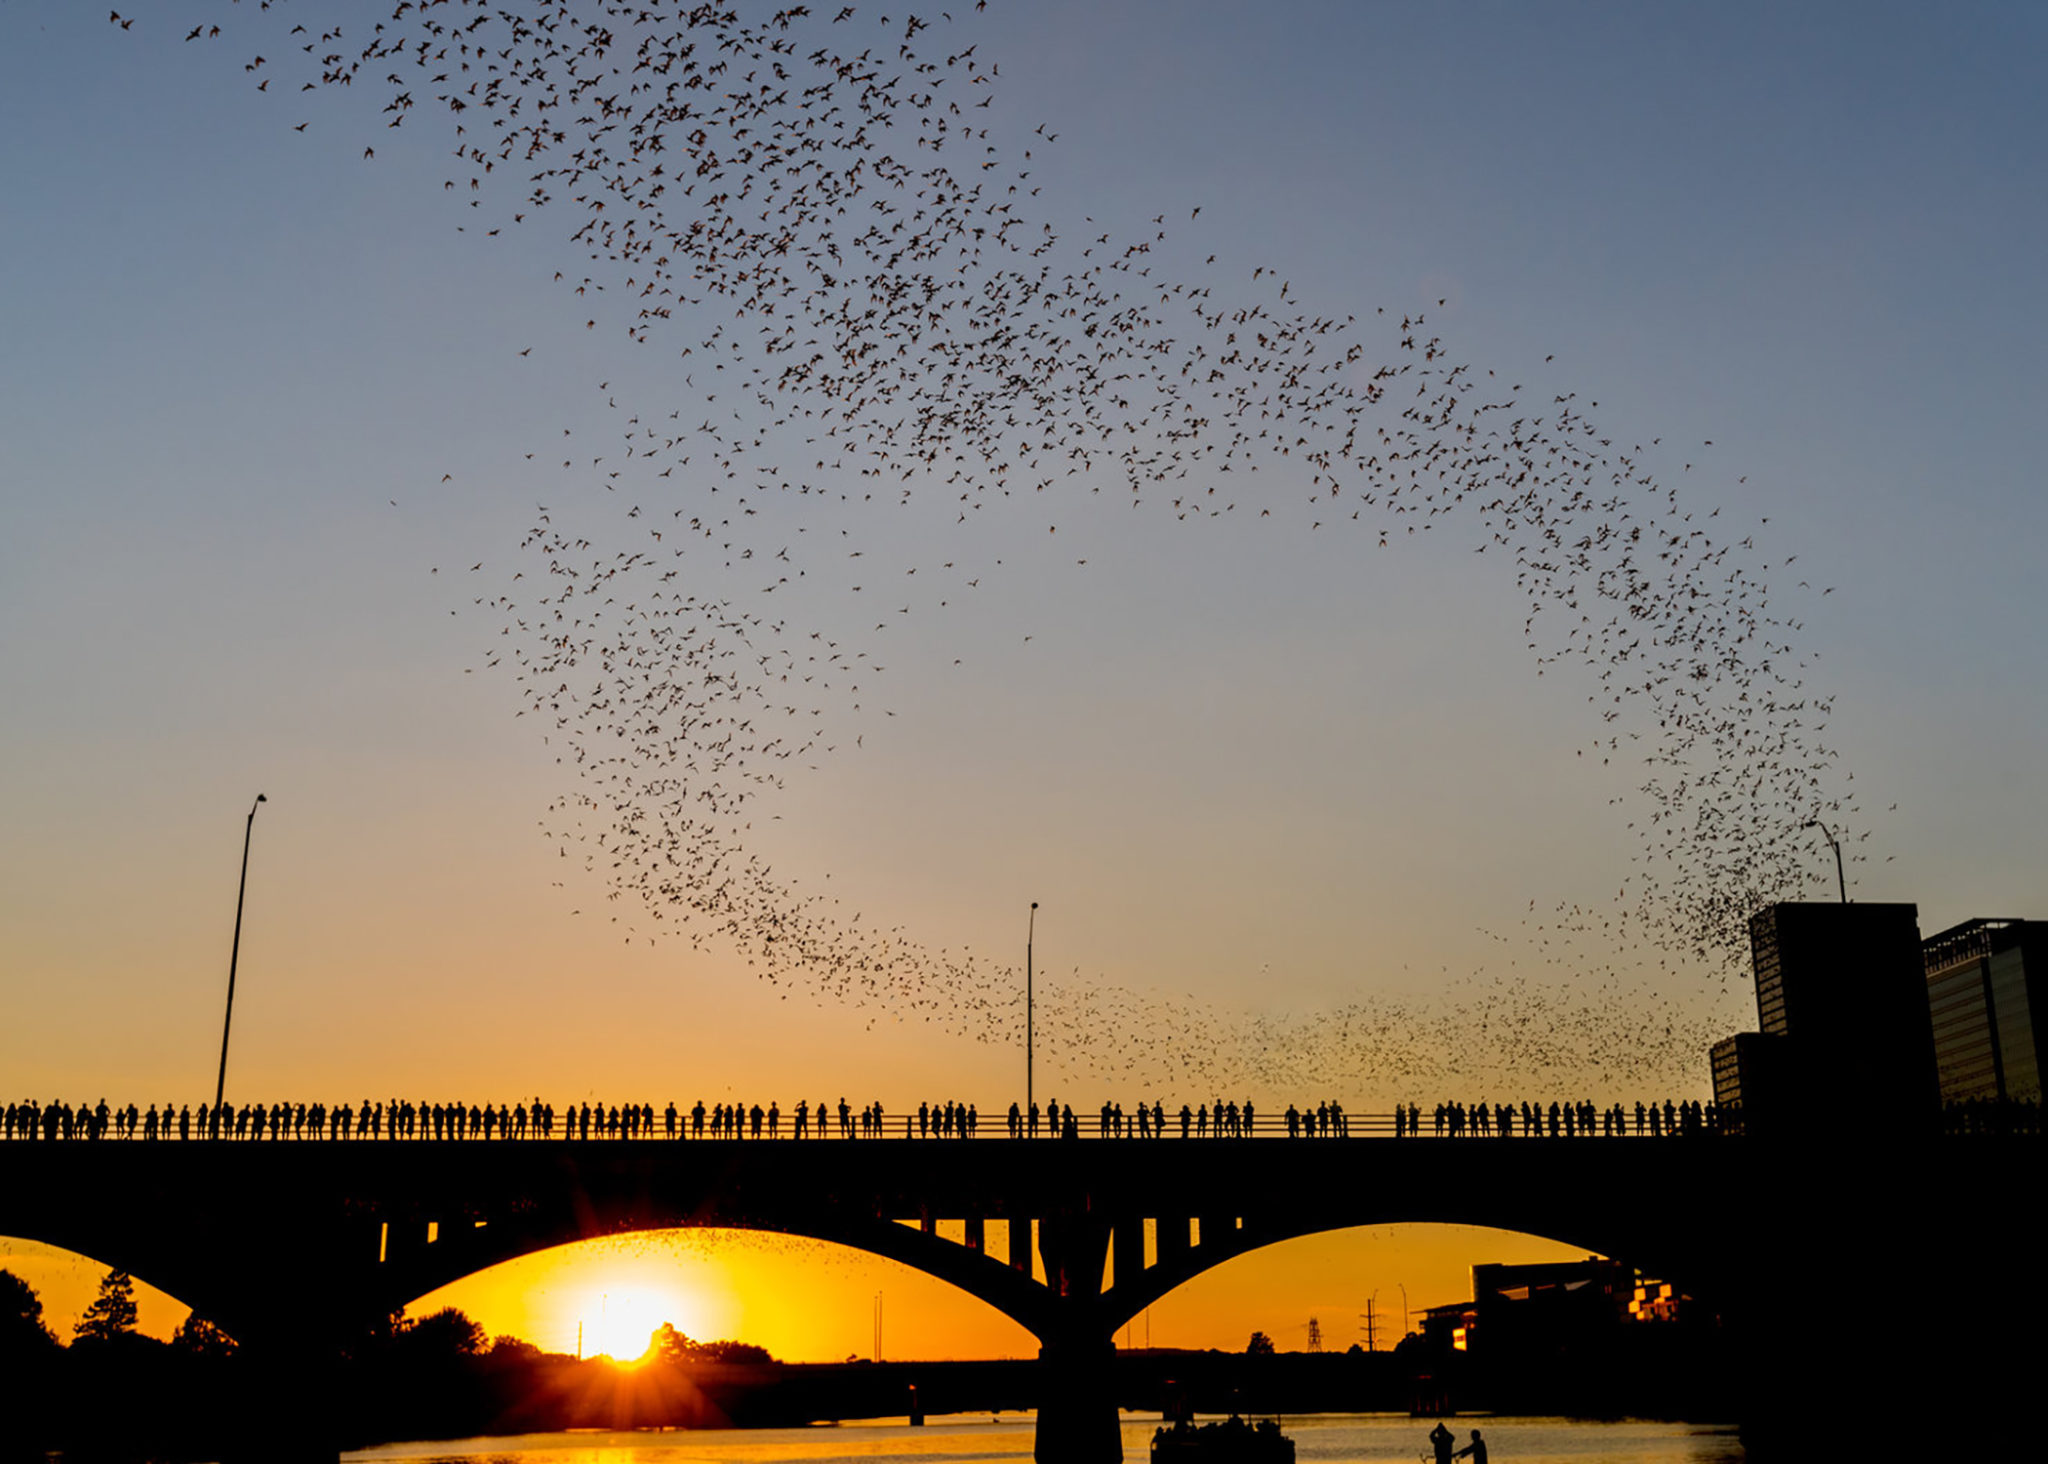 Bats flying out from under an Austin bridge